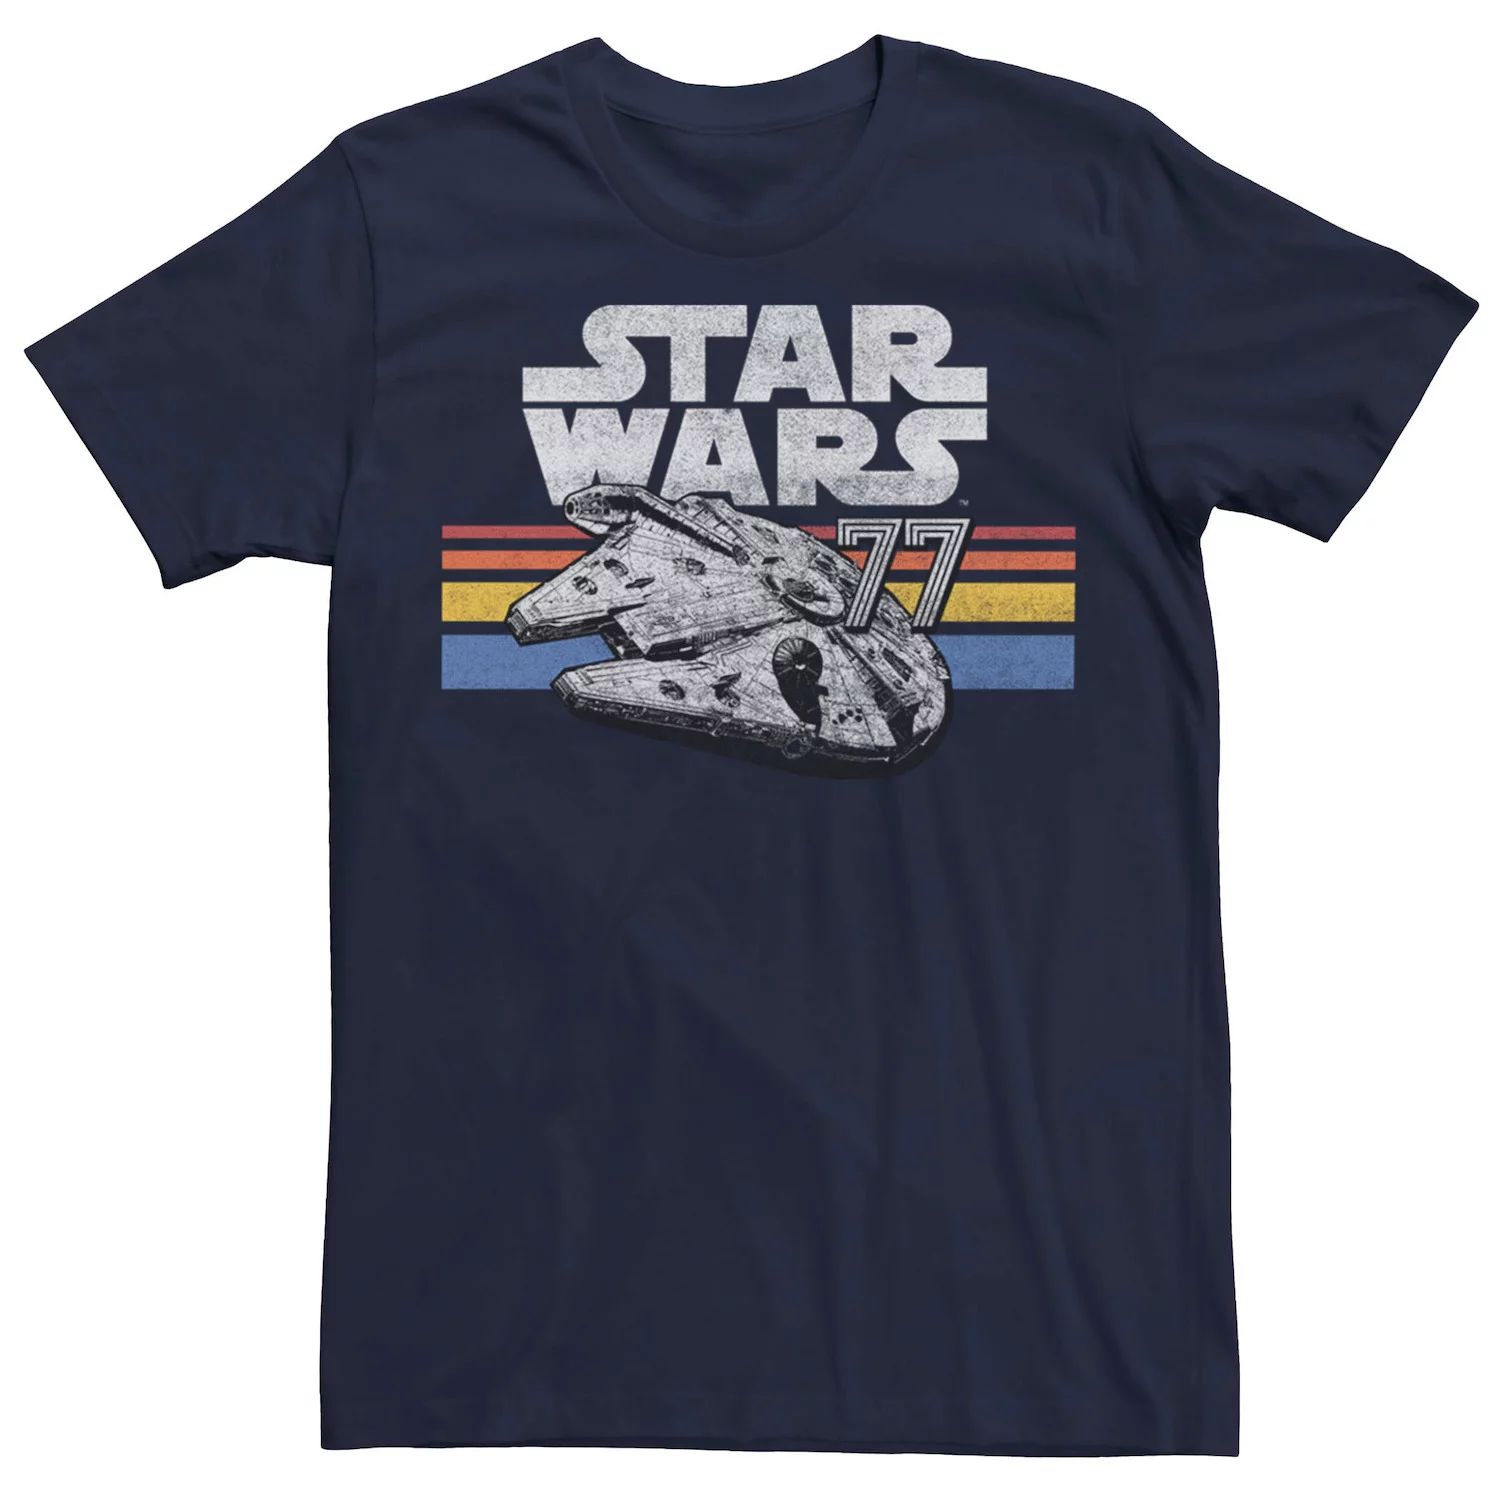 Мужская футболка с логотипом Millennium Falcon 77 Retro Lines Star Wars, синий